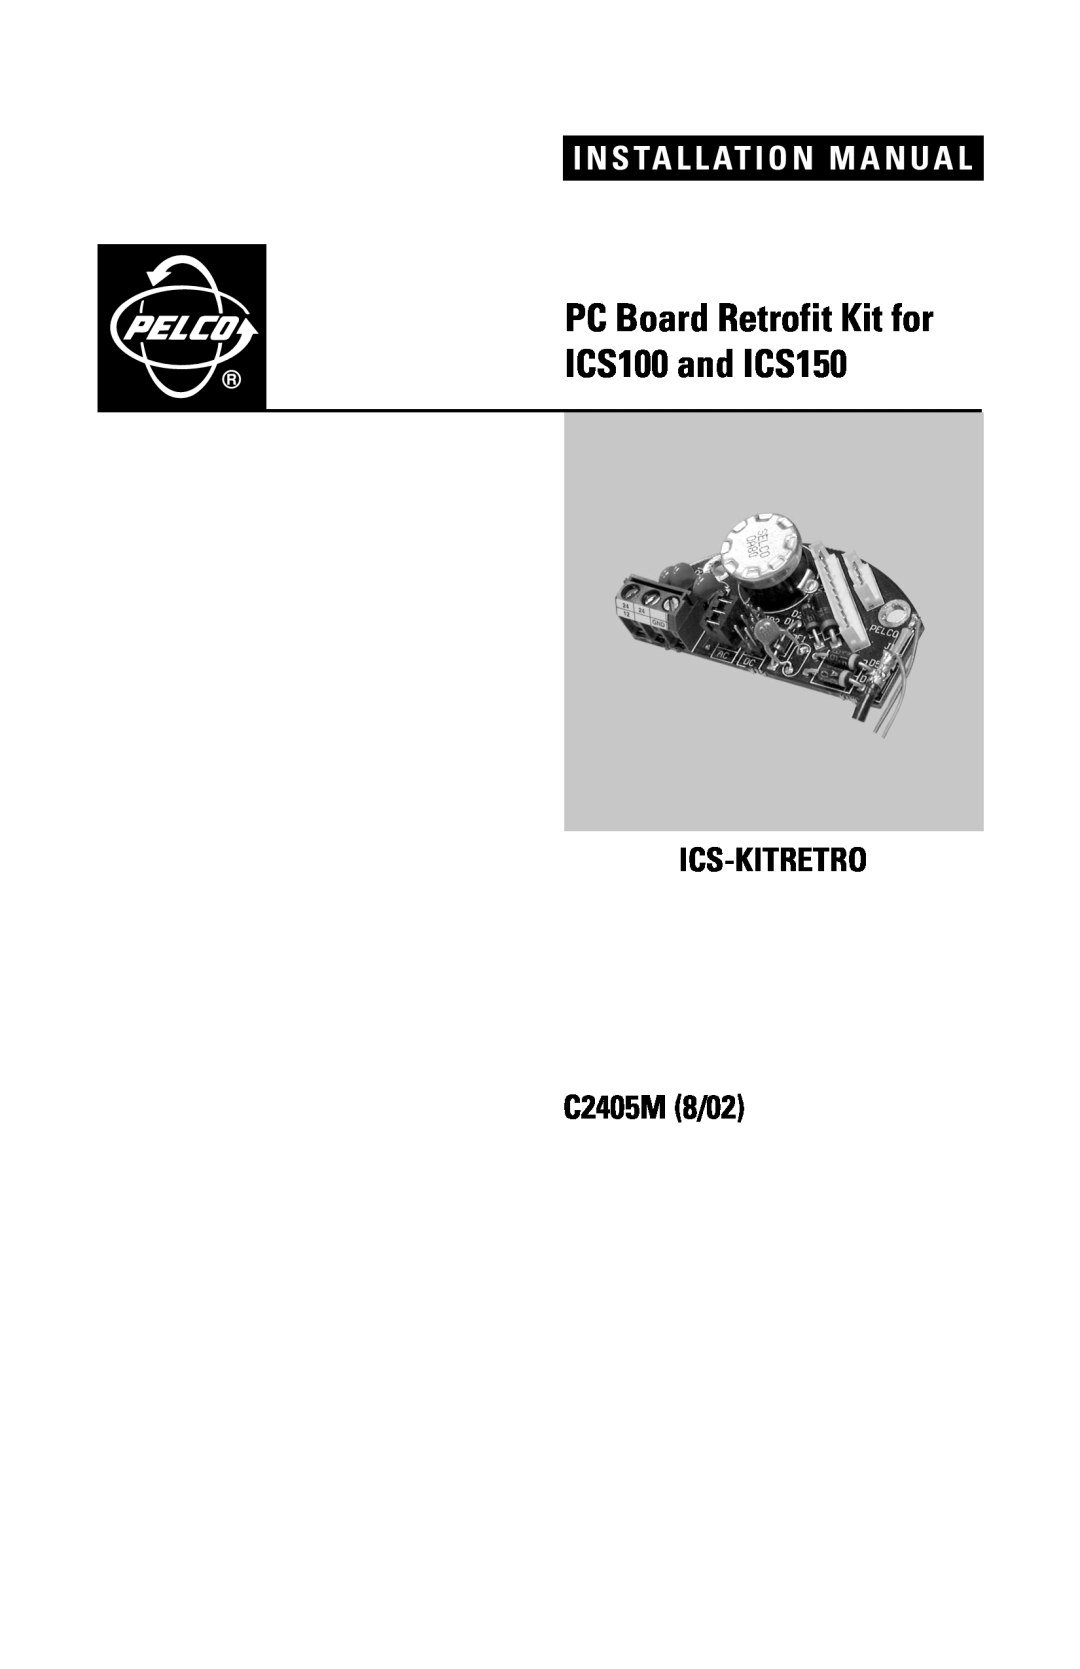 Pelco installation manual I N S Ta L L At I O N M A N U A L, ICS100 and ICS150, ICS-KITRETRO C2405M 8/02 